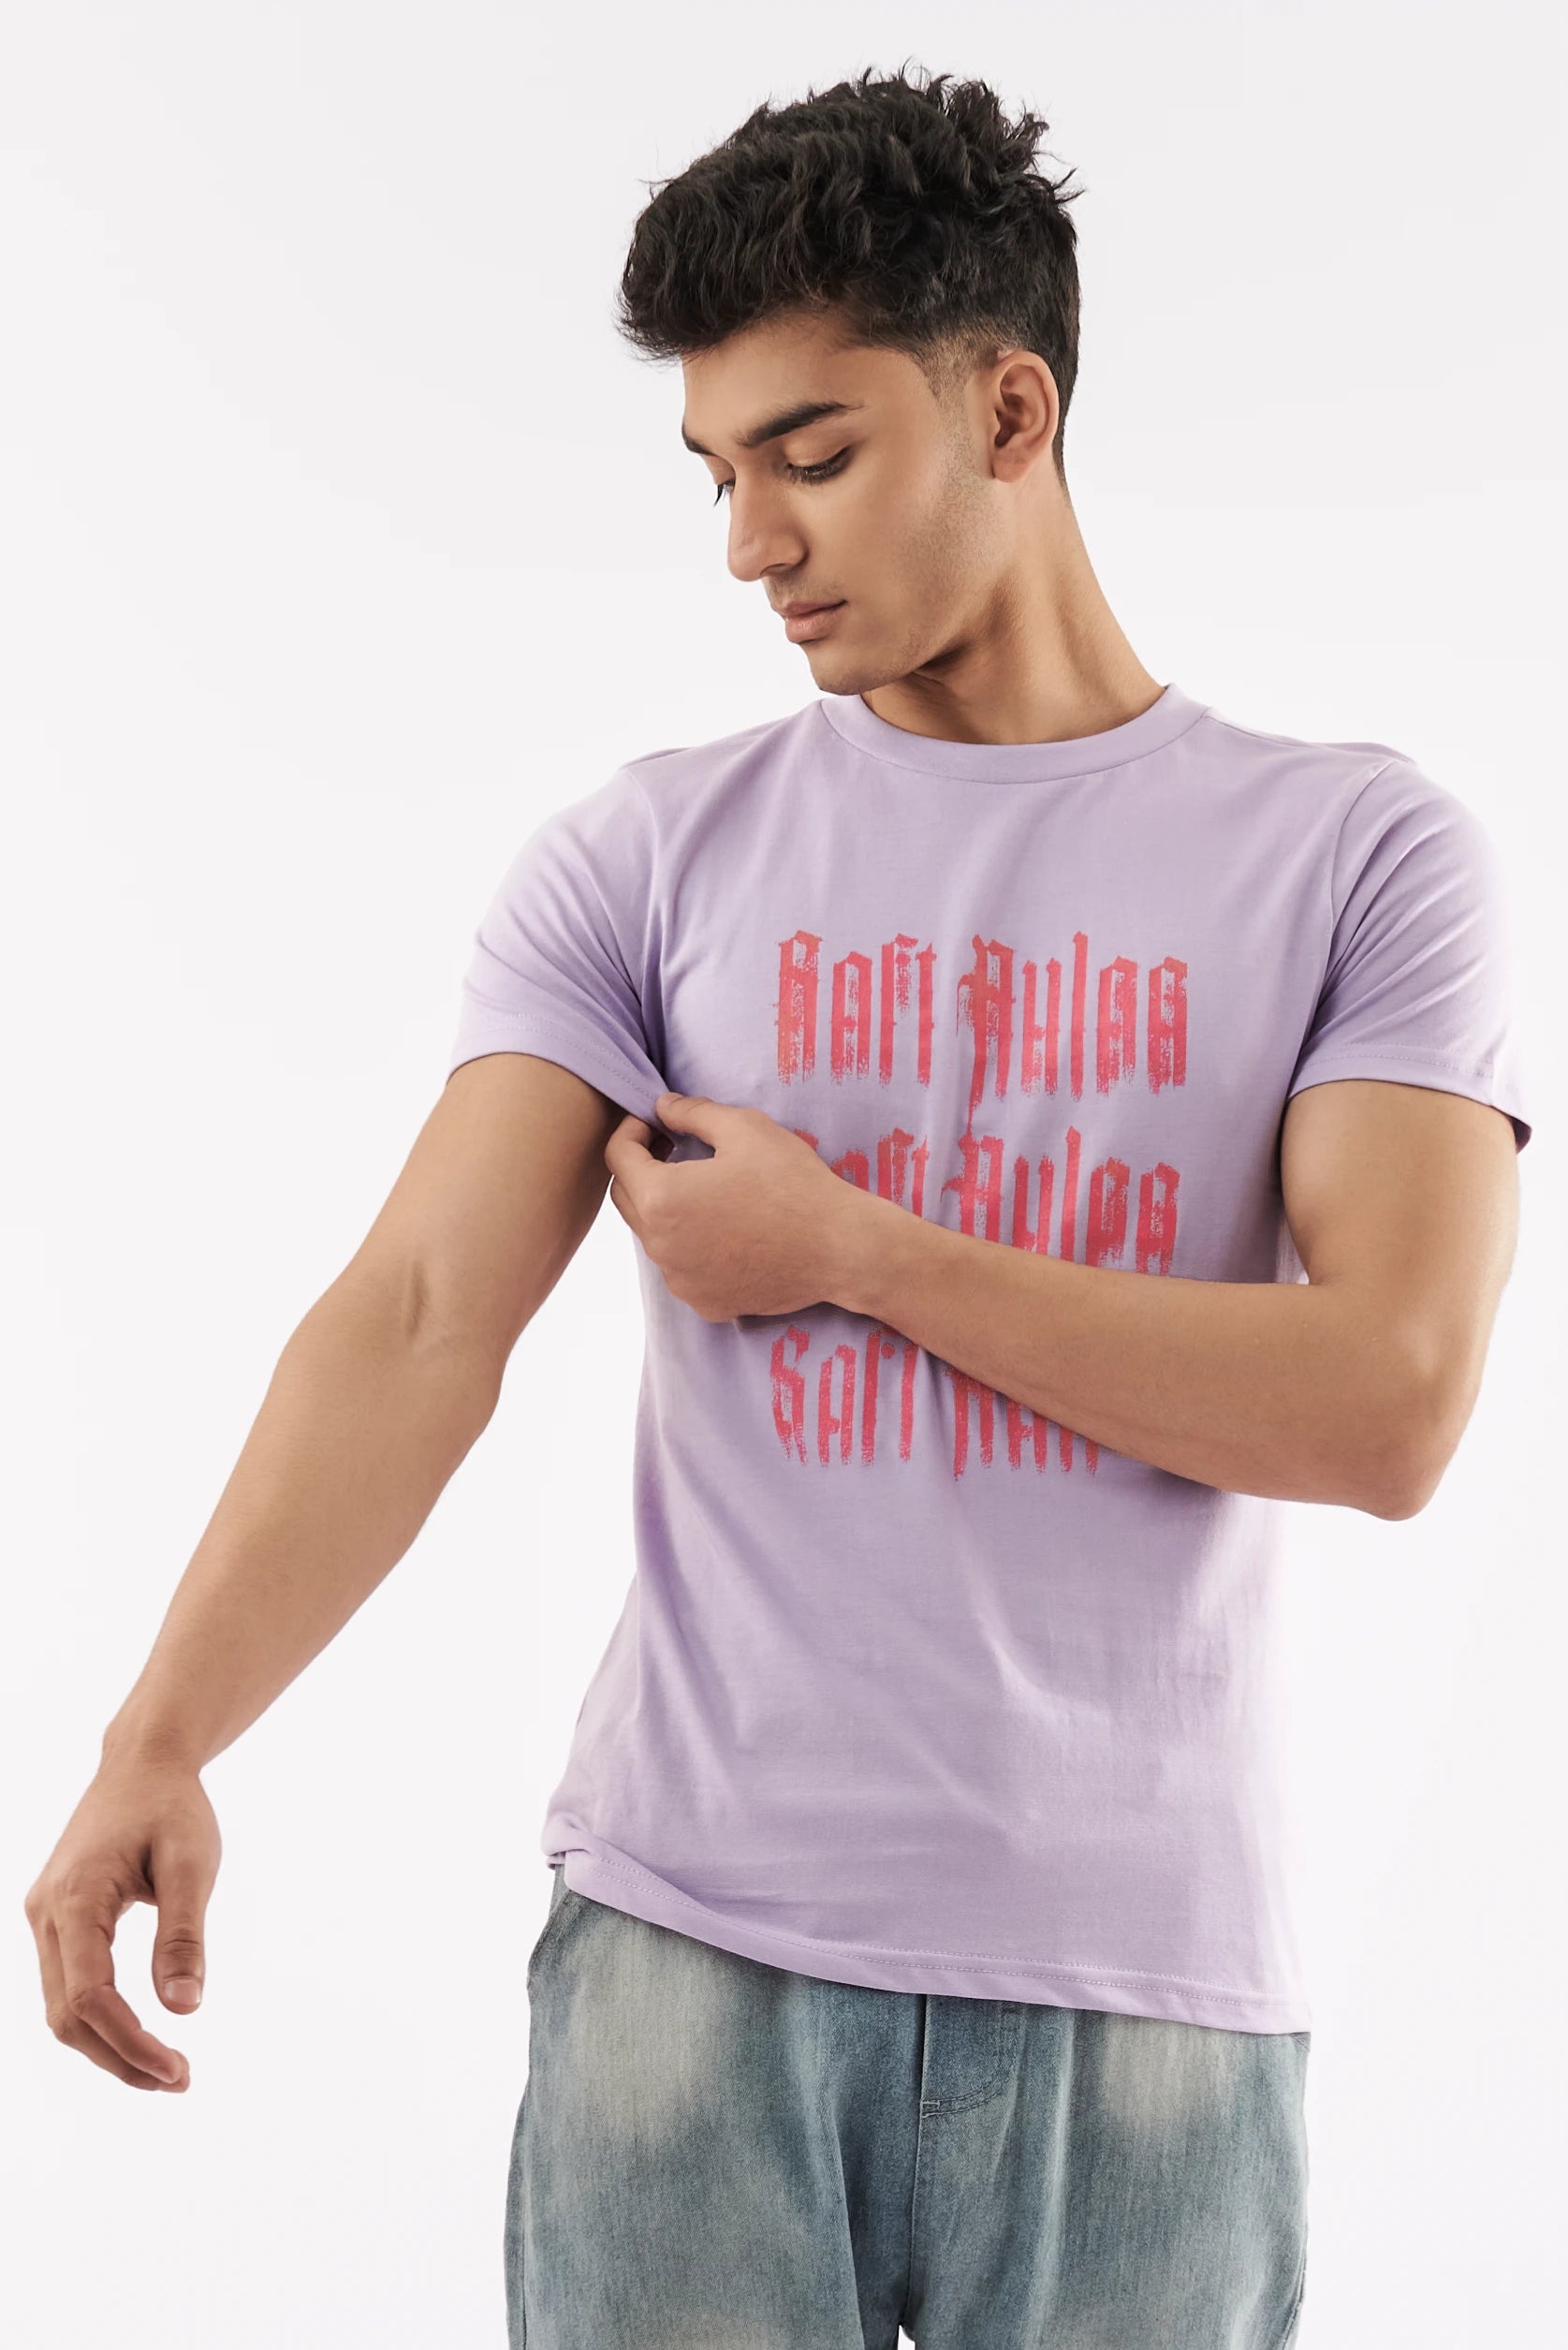 Men's Rules Graphics T-Shirt Purple